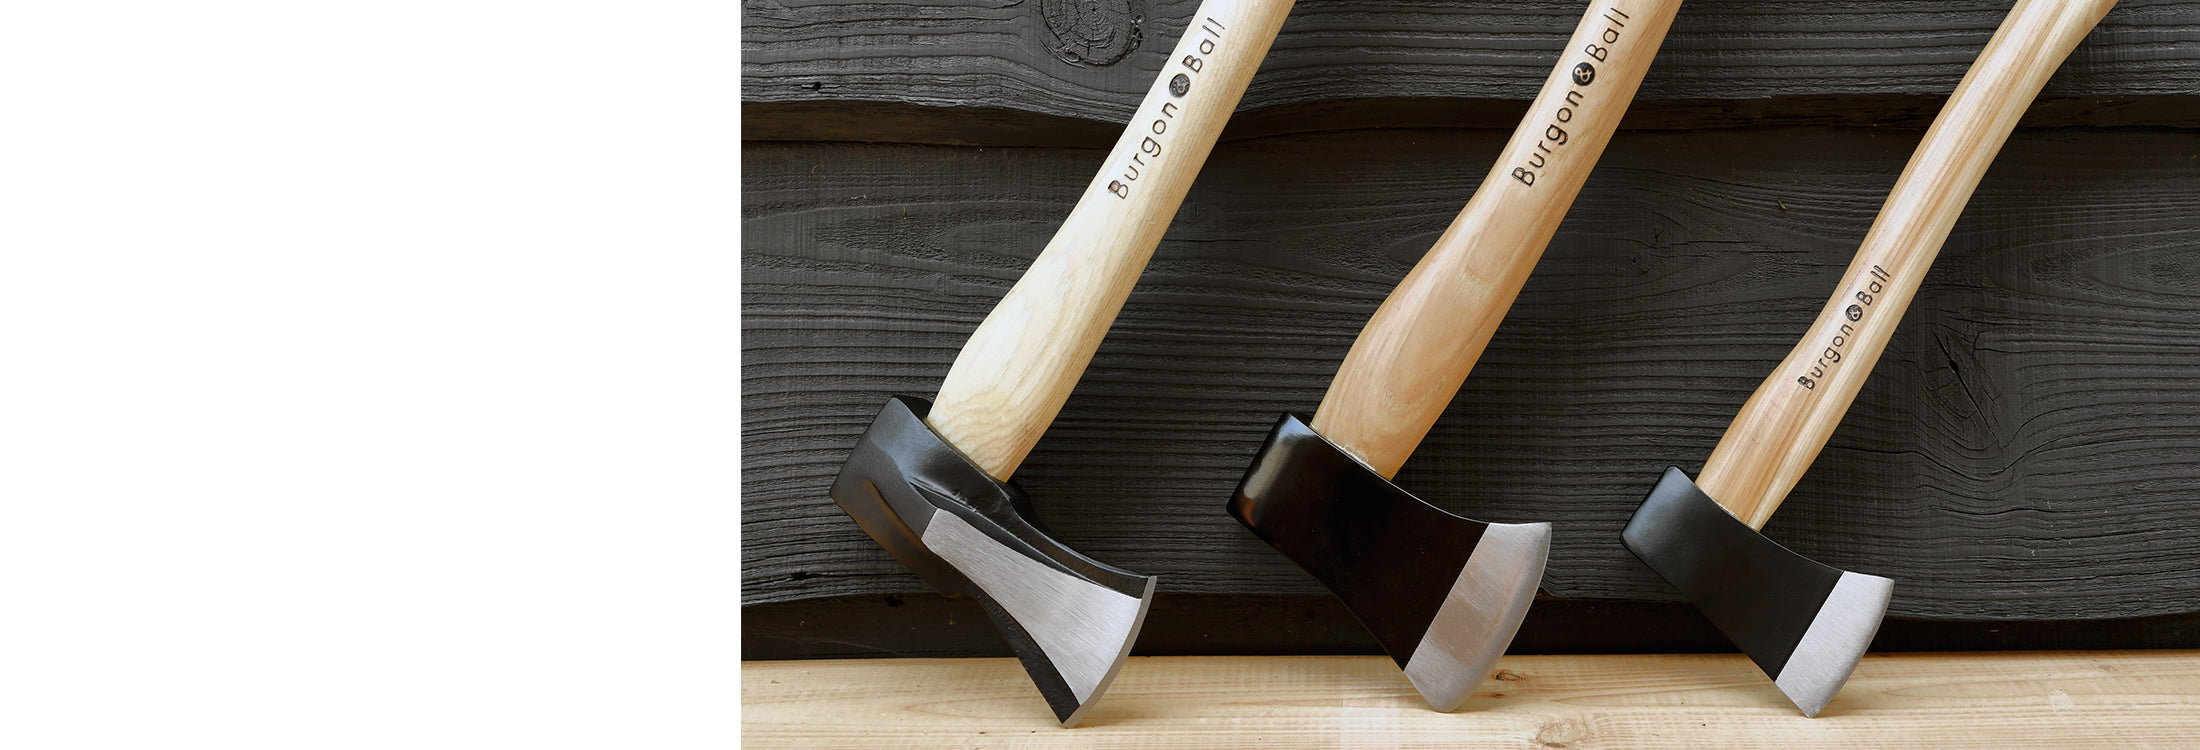 RHS-Endorsed Wood Cutting Tools